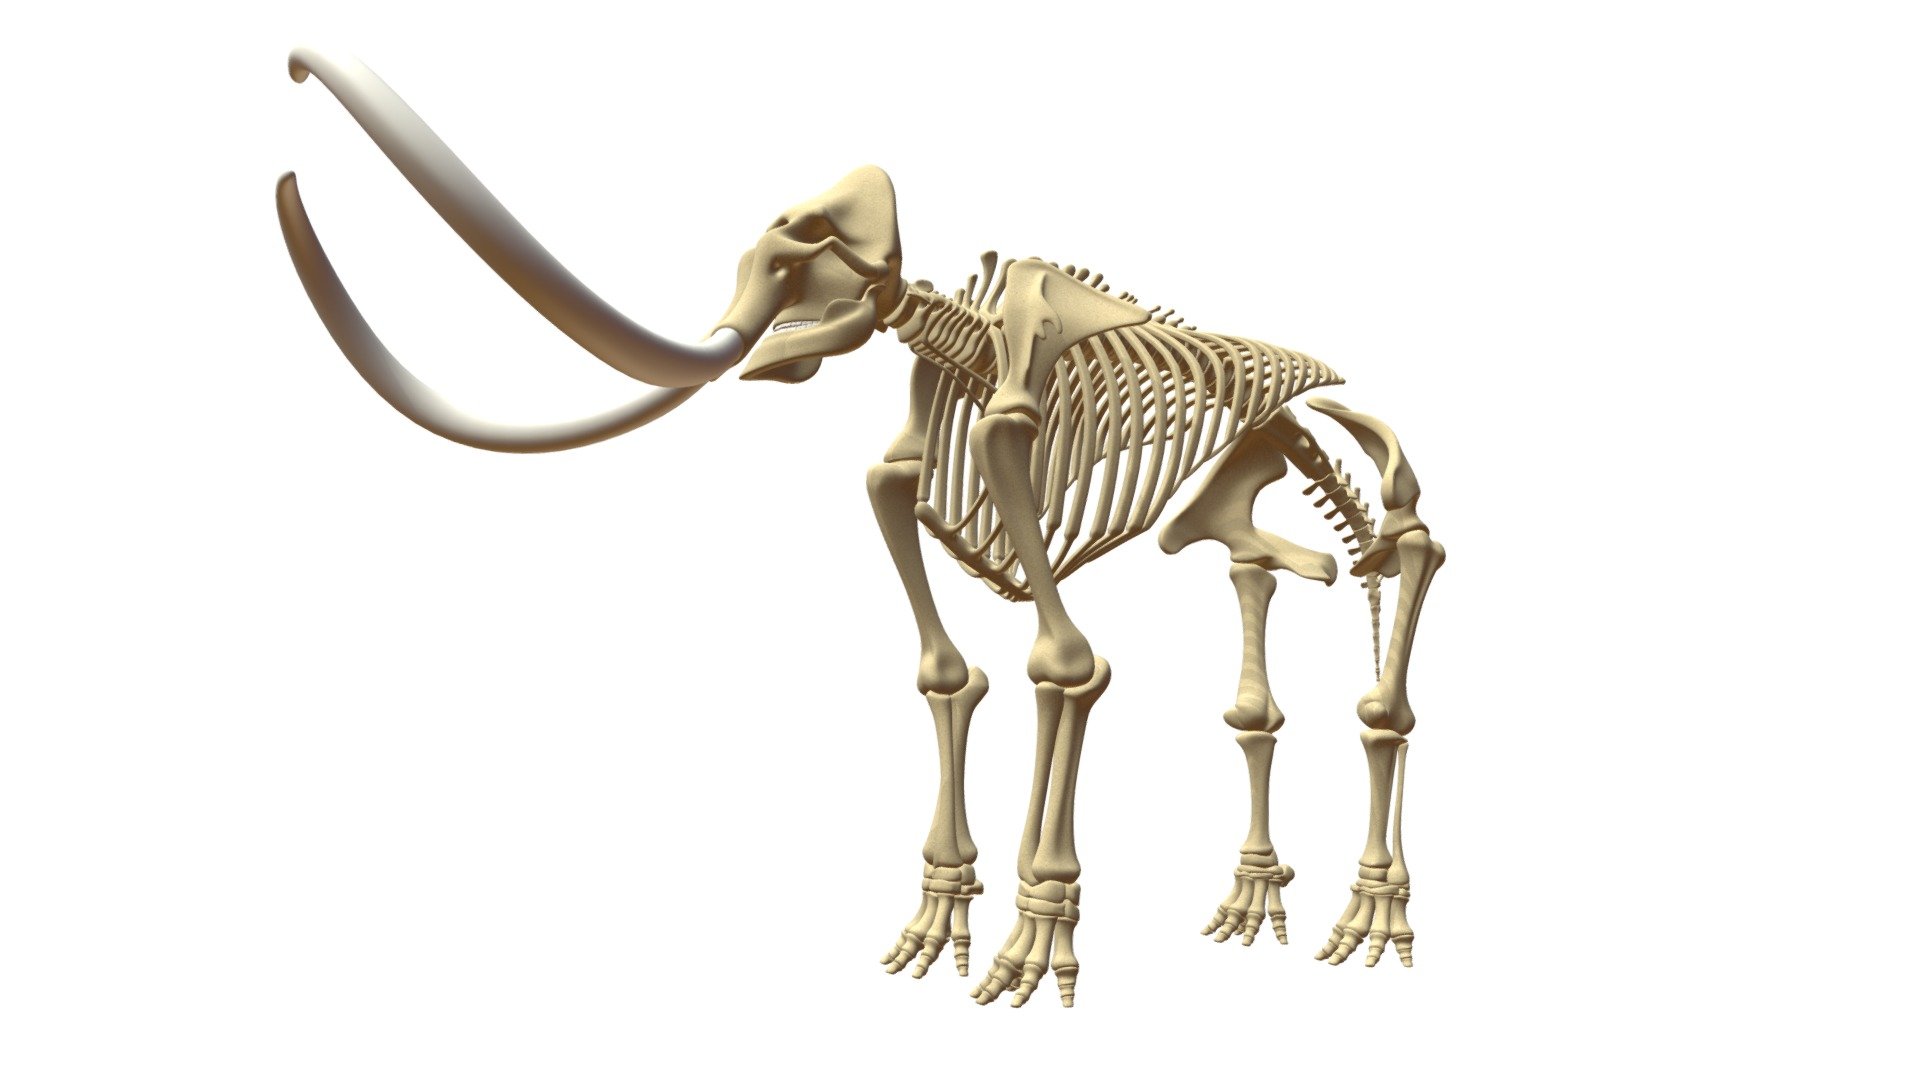 High quality 3D model of mammoth skeleton 3d model